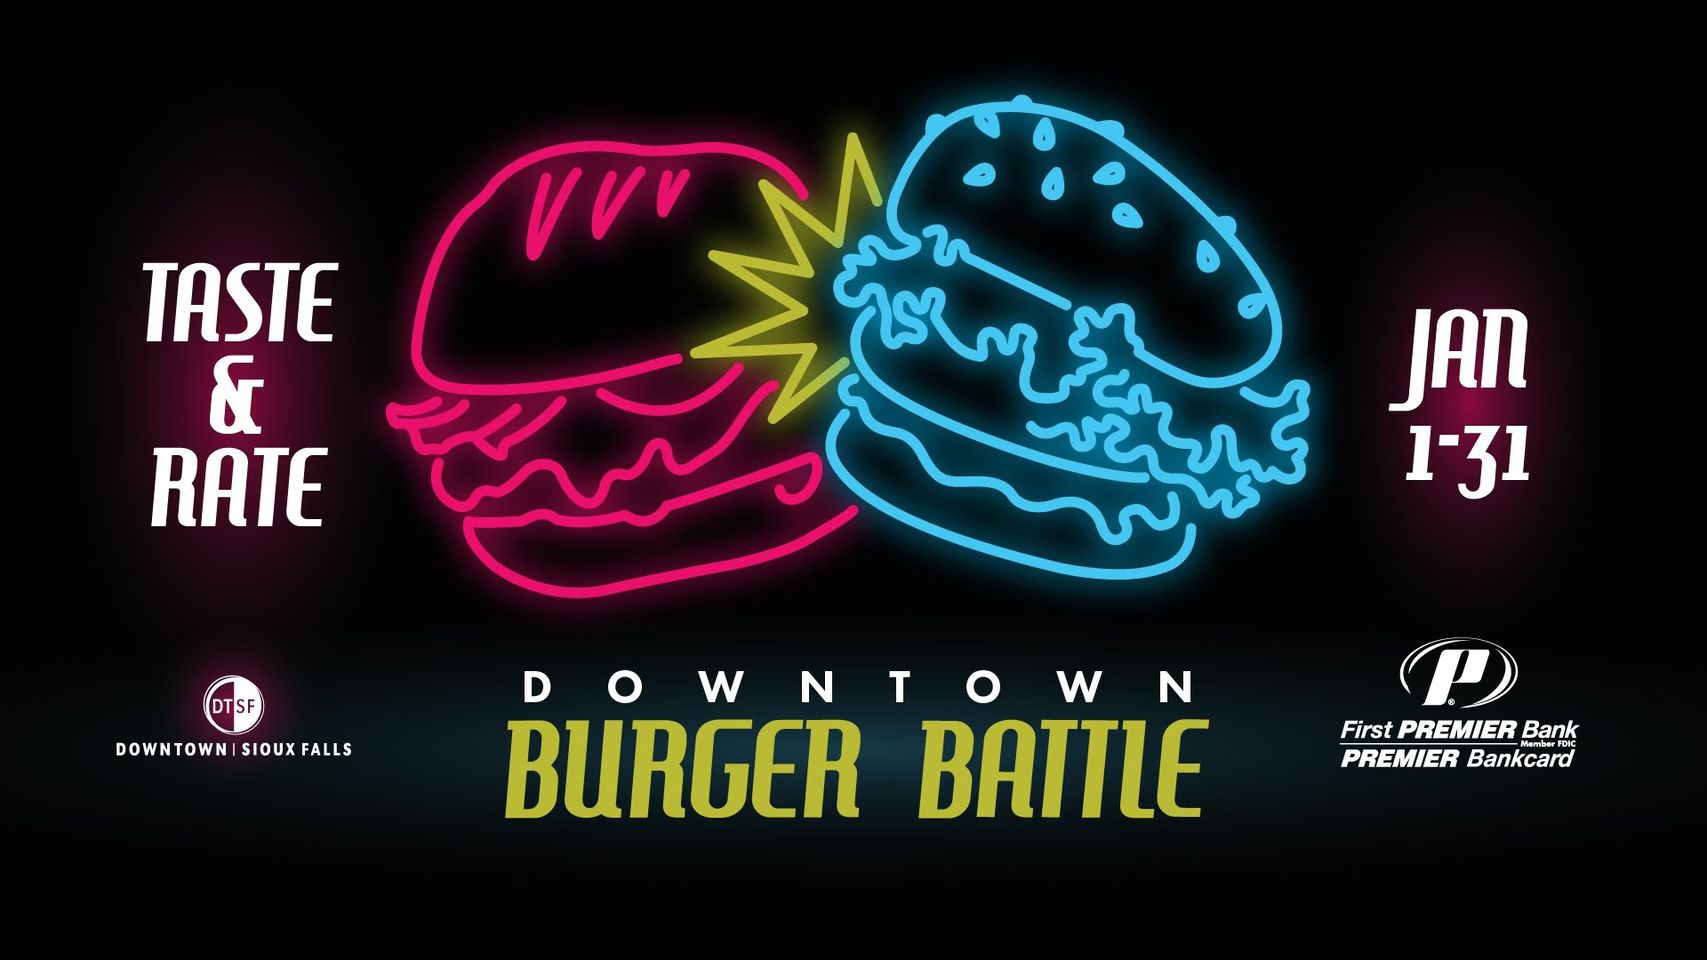 Burger Battle Sioux Falls Arts Council